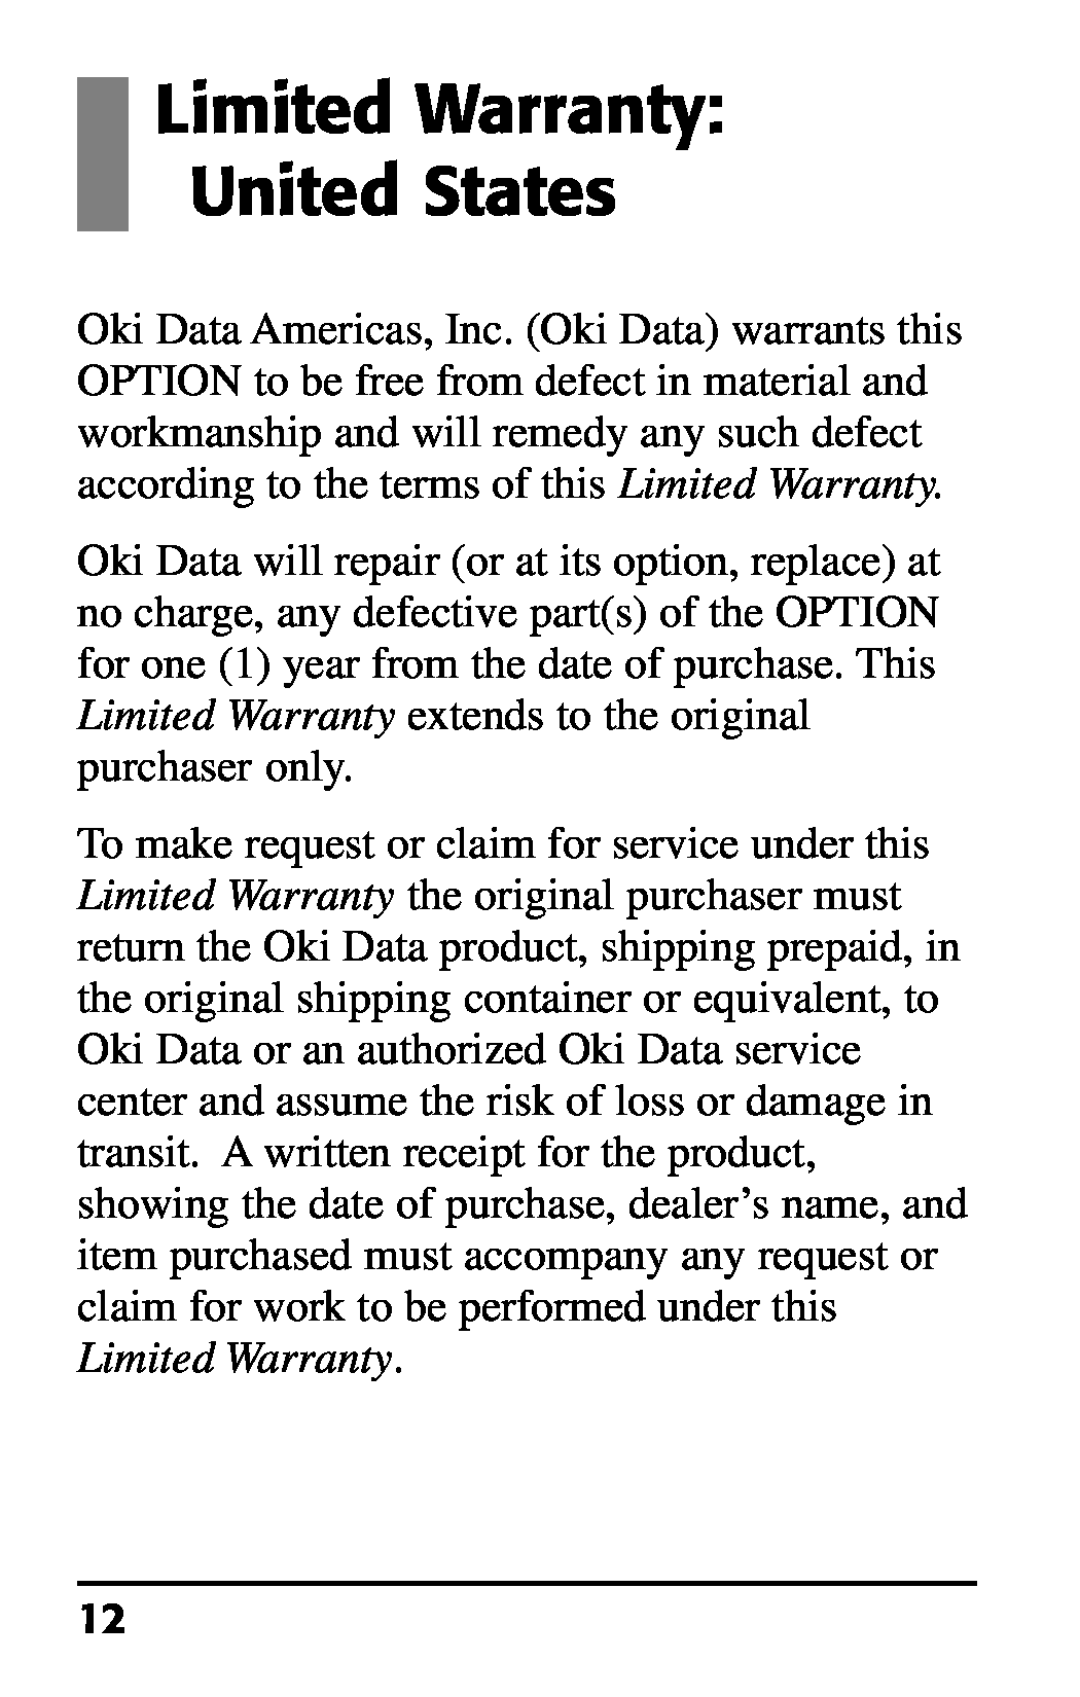 Oki 70037301 installation instructions Limited Warranty United States 